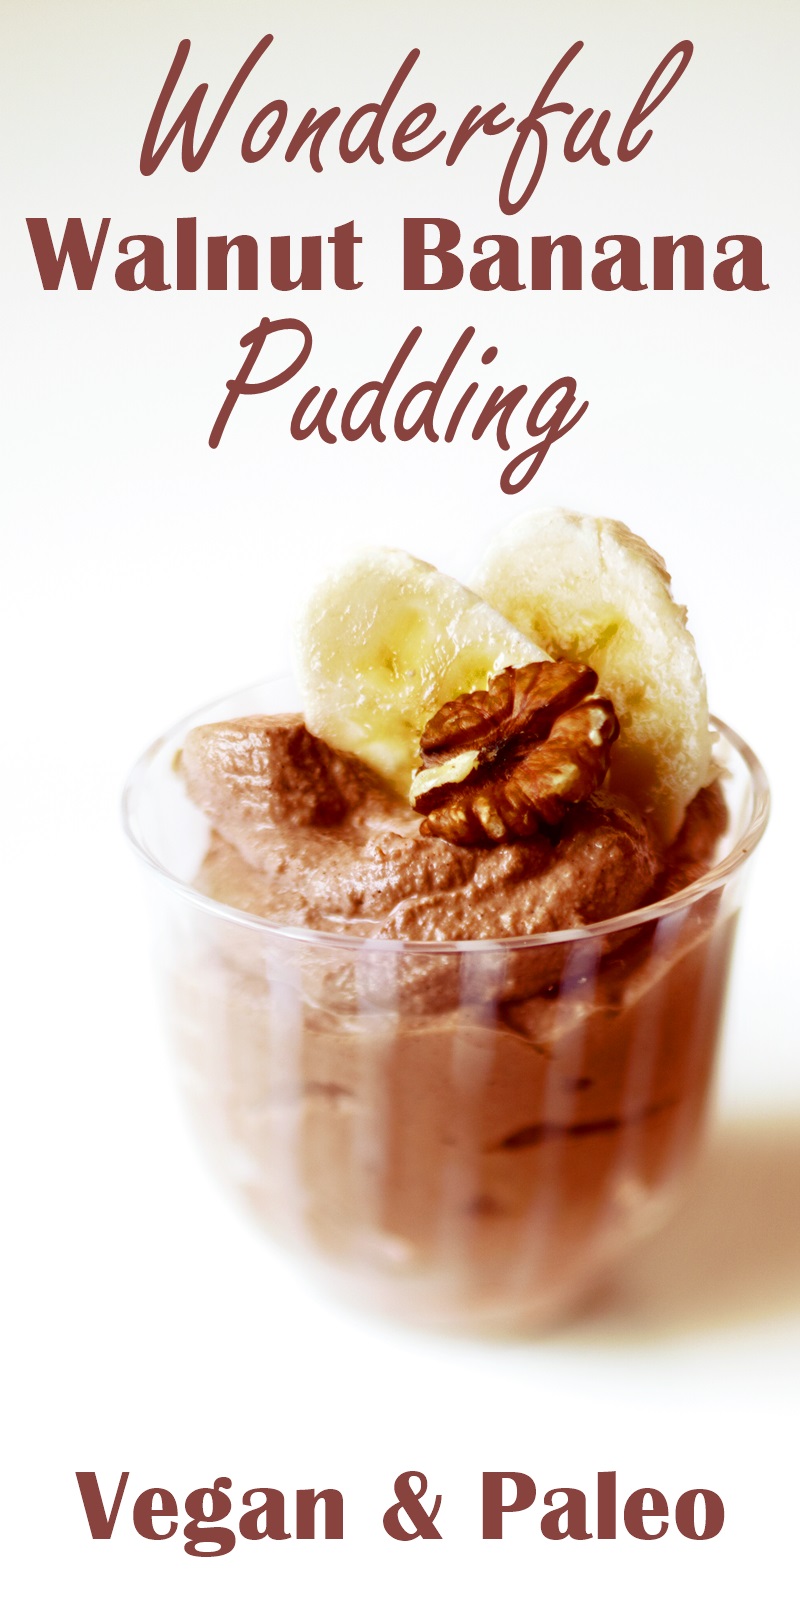 Wonderful Walnut Vegan Banana Pudding Recipe (healthy and paleo too!)